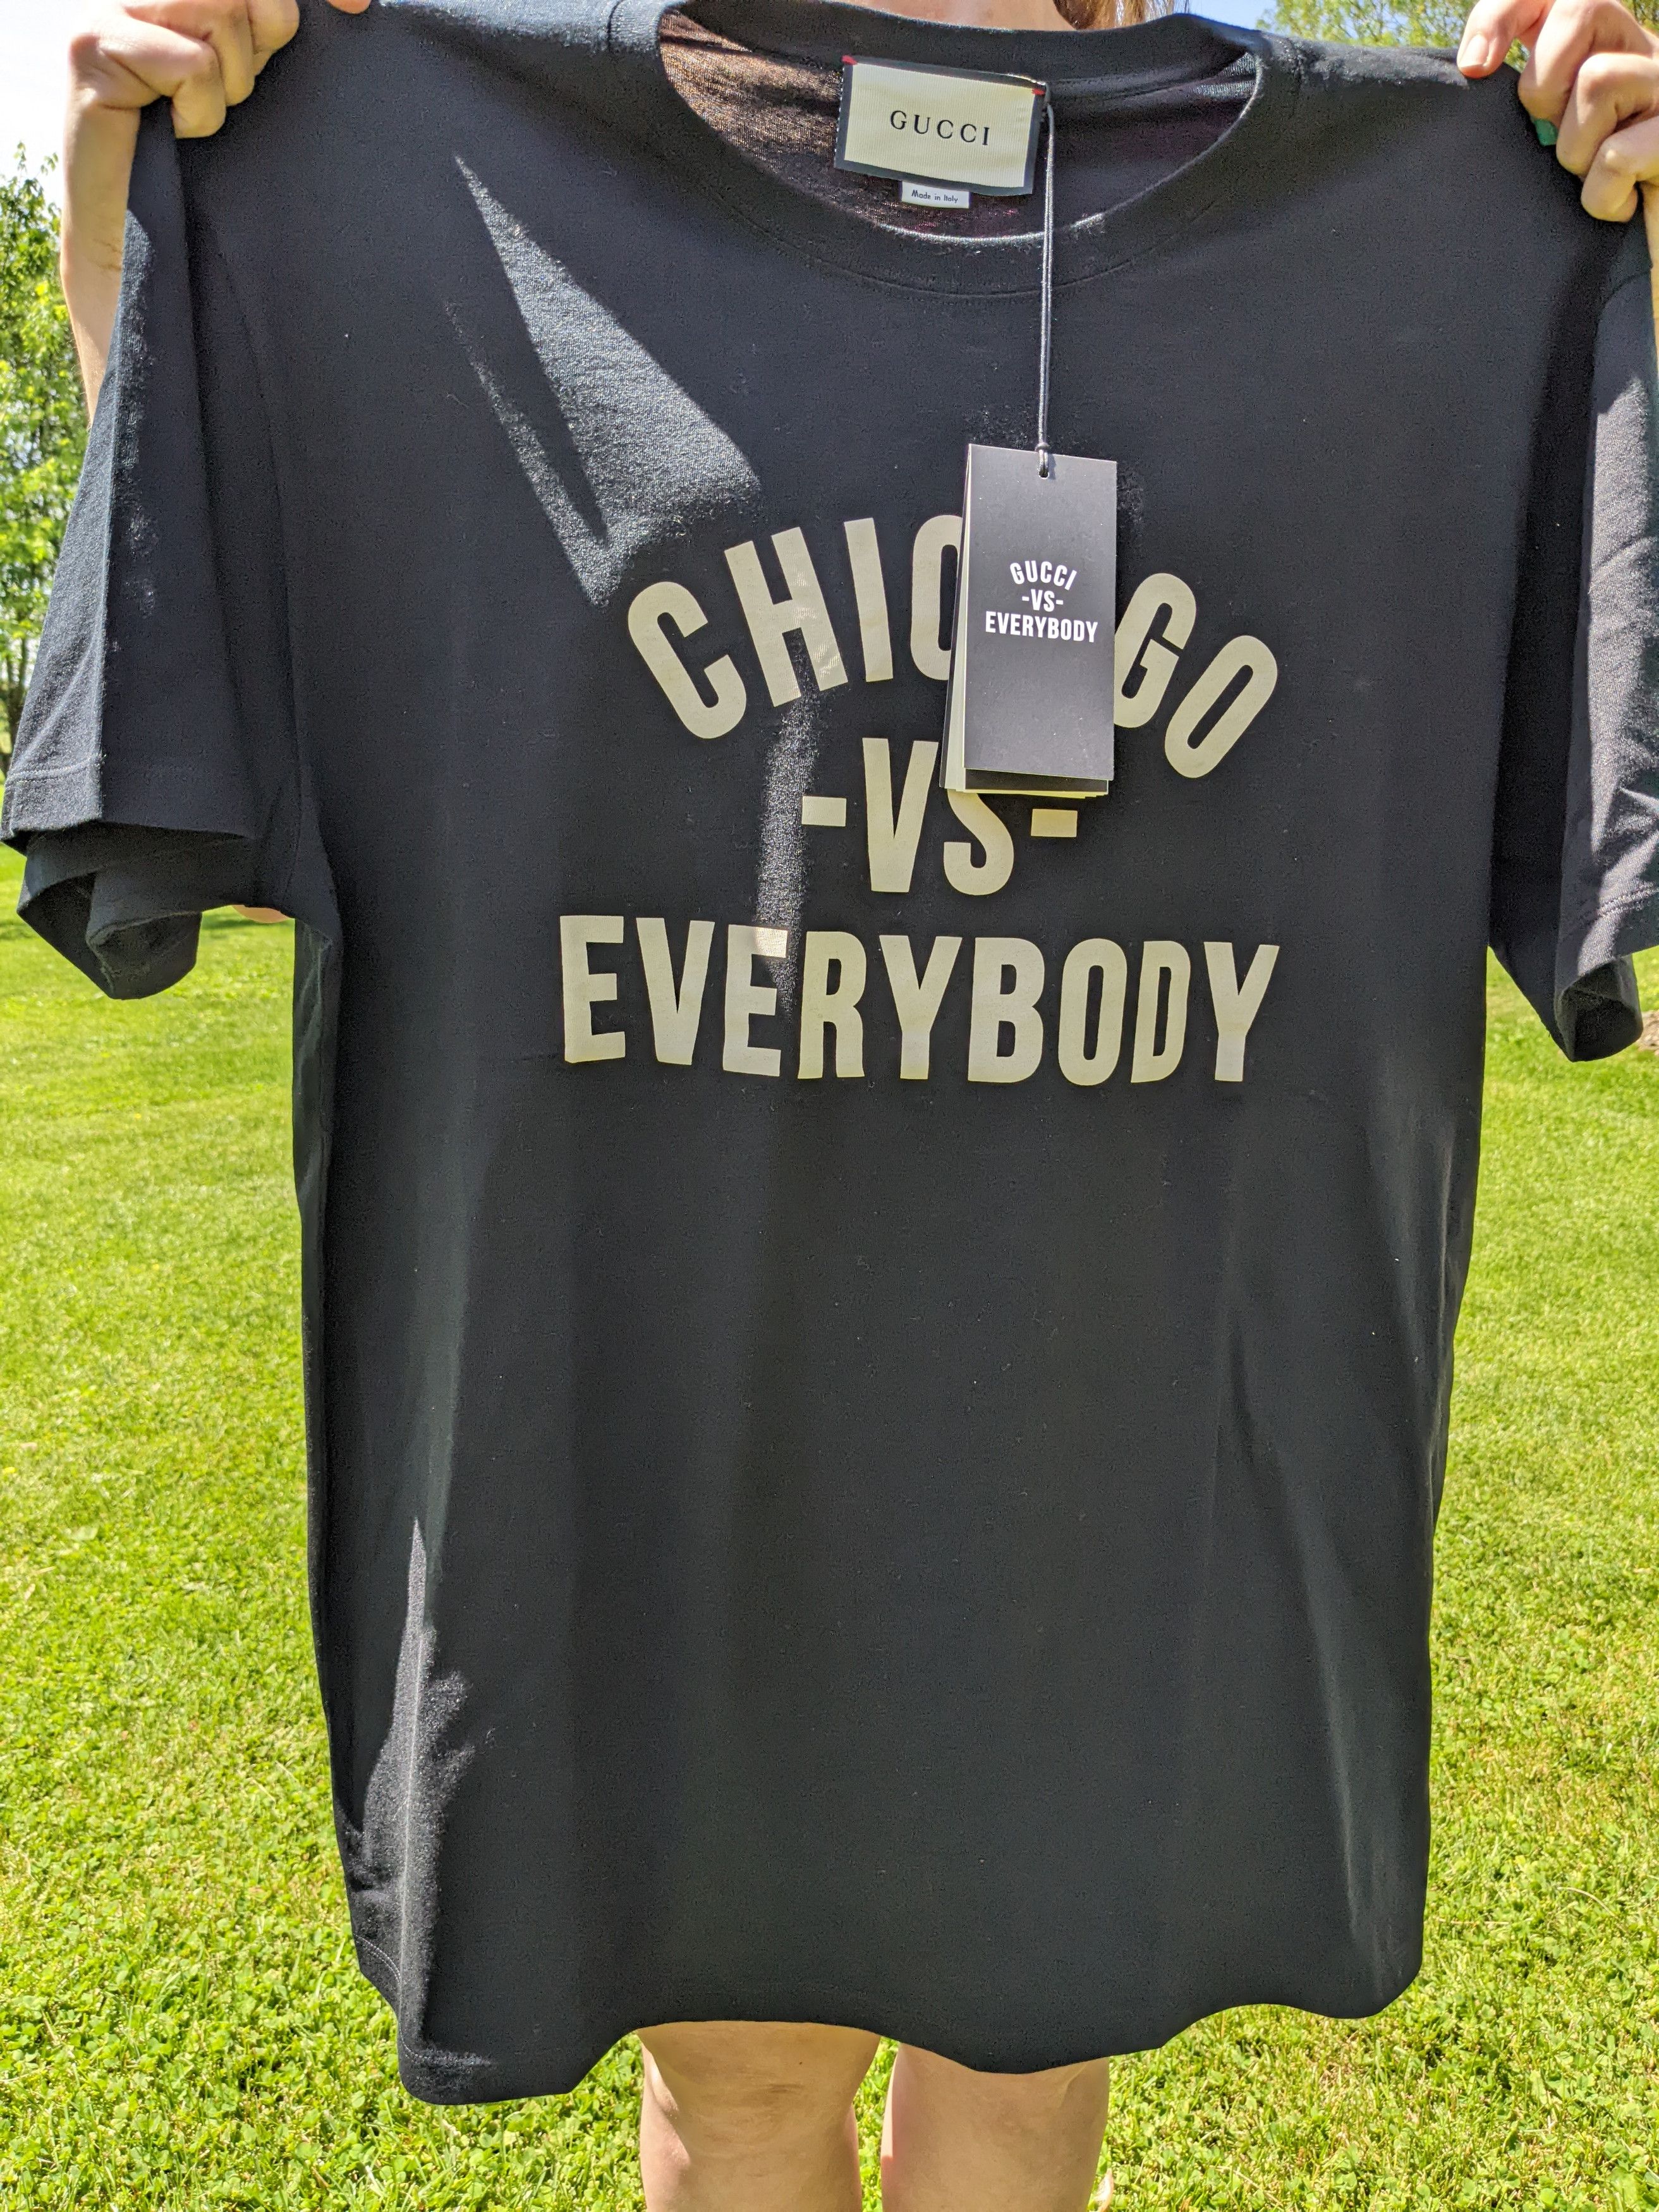 Gucci Chicago vs. Everybody T-Shirt Black